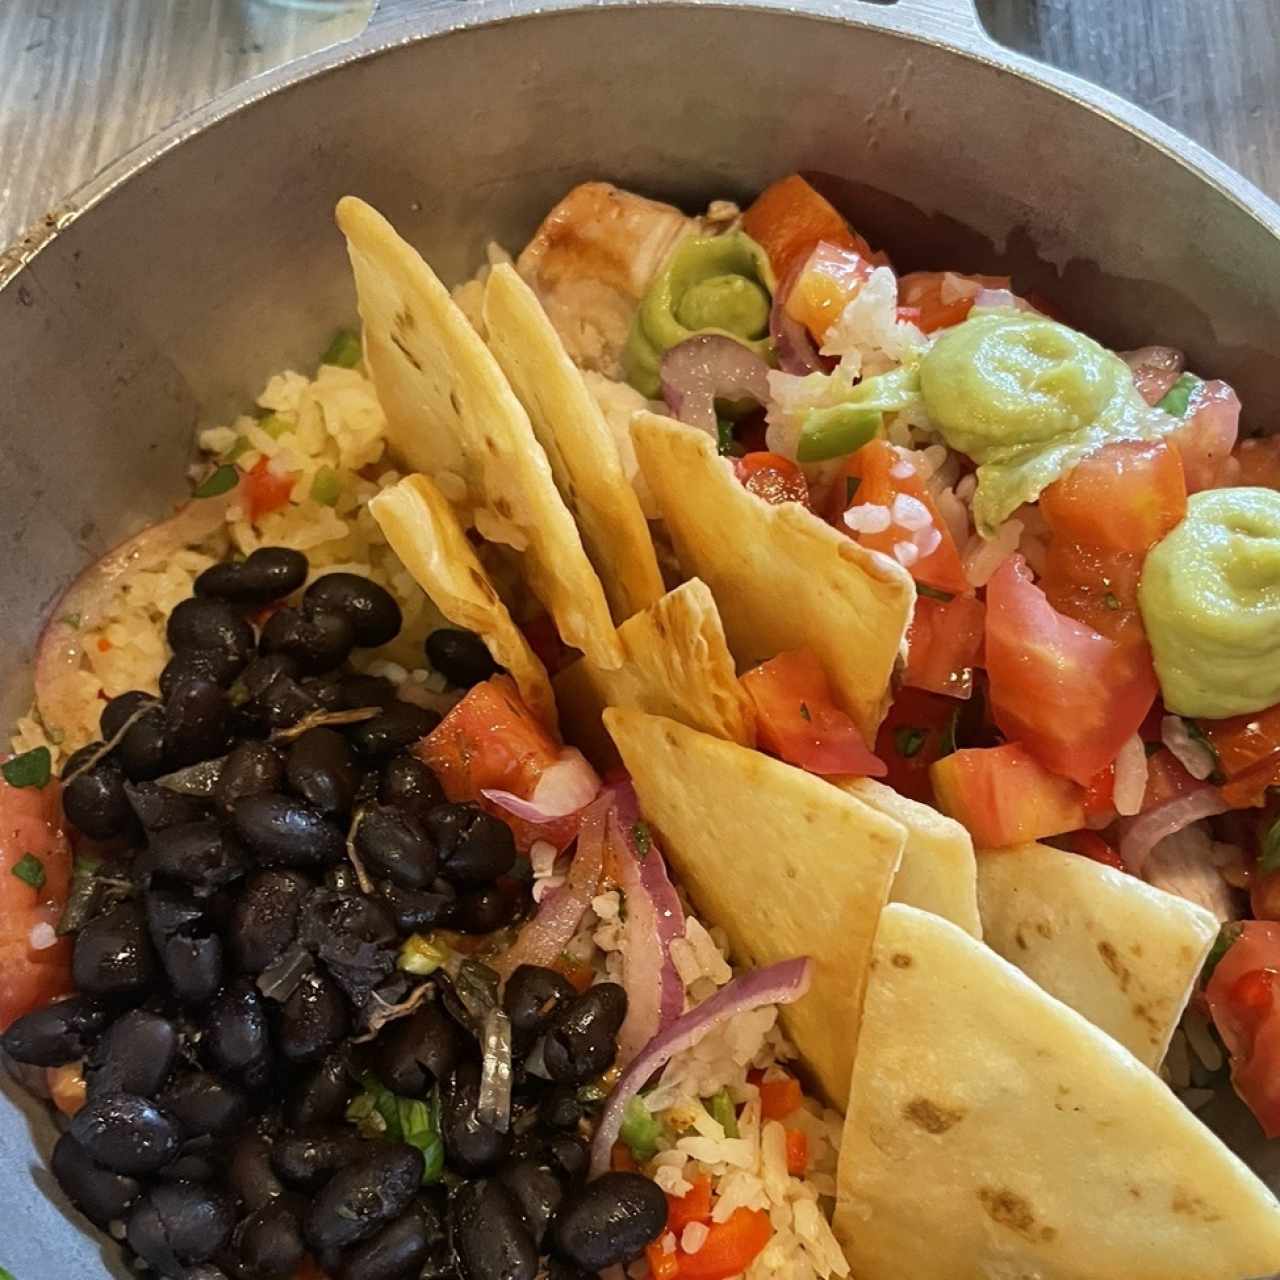 Paila Lunch - Mexicana